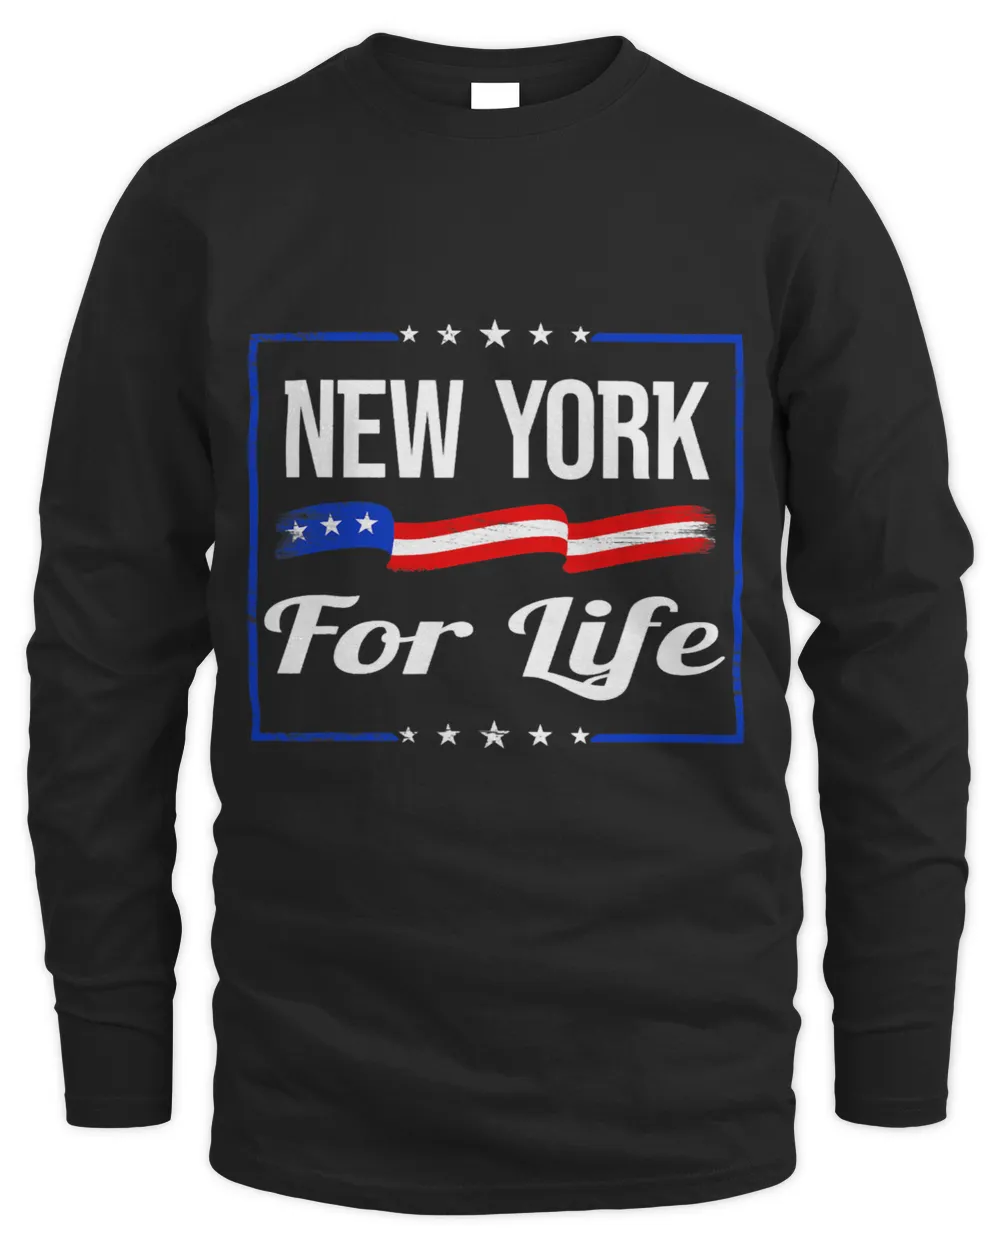 NEW YORK FOR LIFE ROCHESTER LONG ISLAND BUFFALO NYC